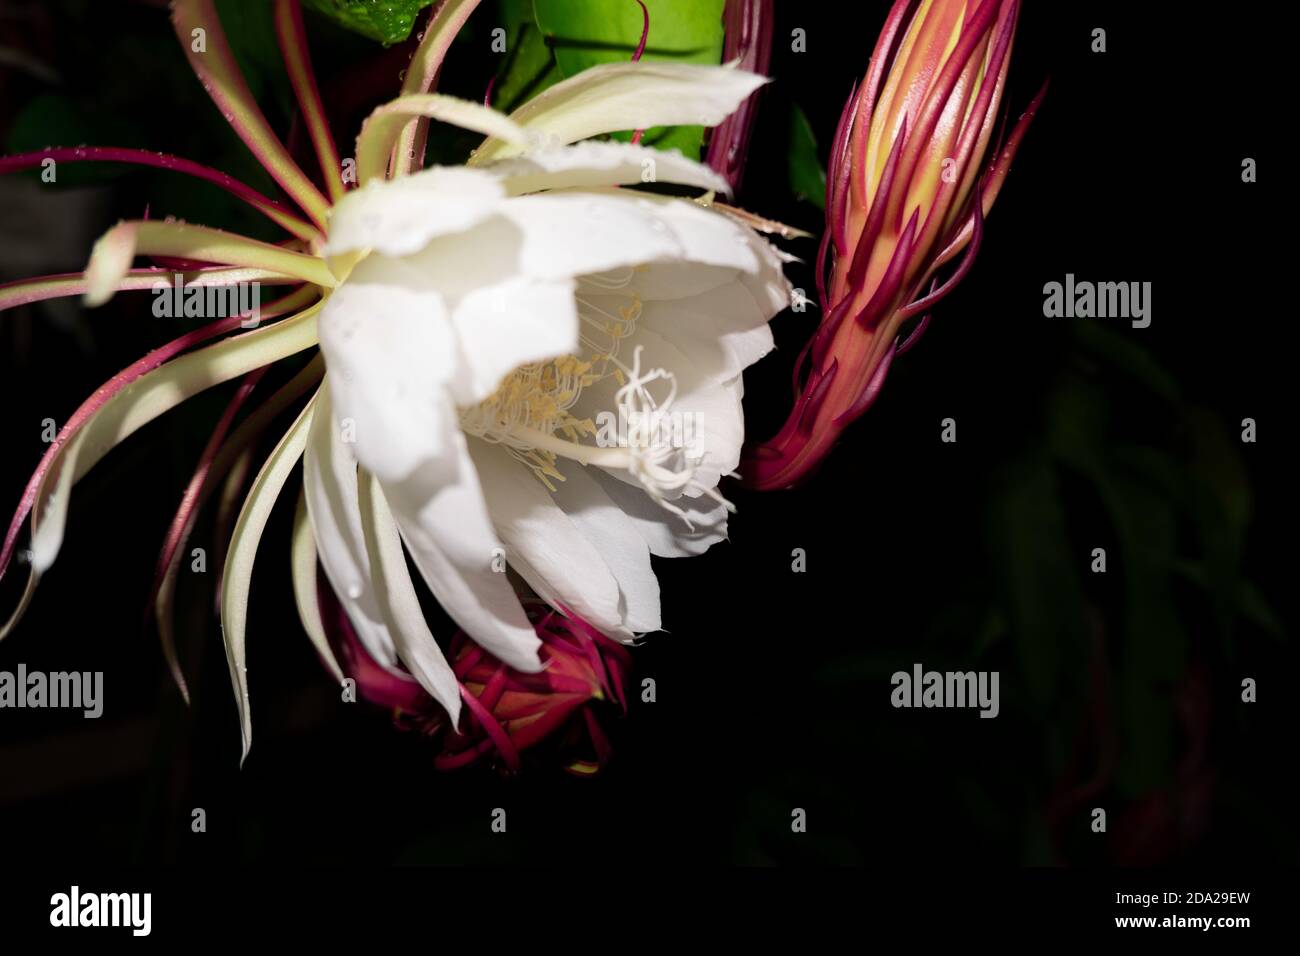 The Wijaya Kusuma (Epiphyllum Anguliger) flower blooms at midnight on a dark background Stock Photo